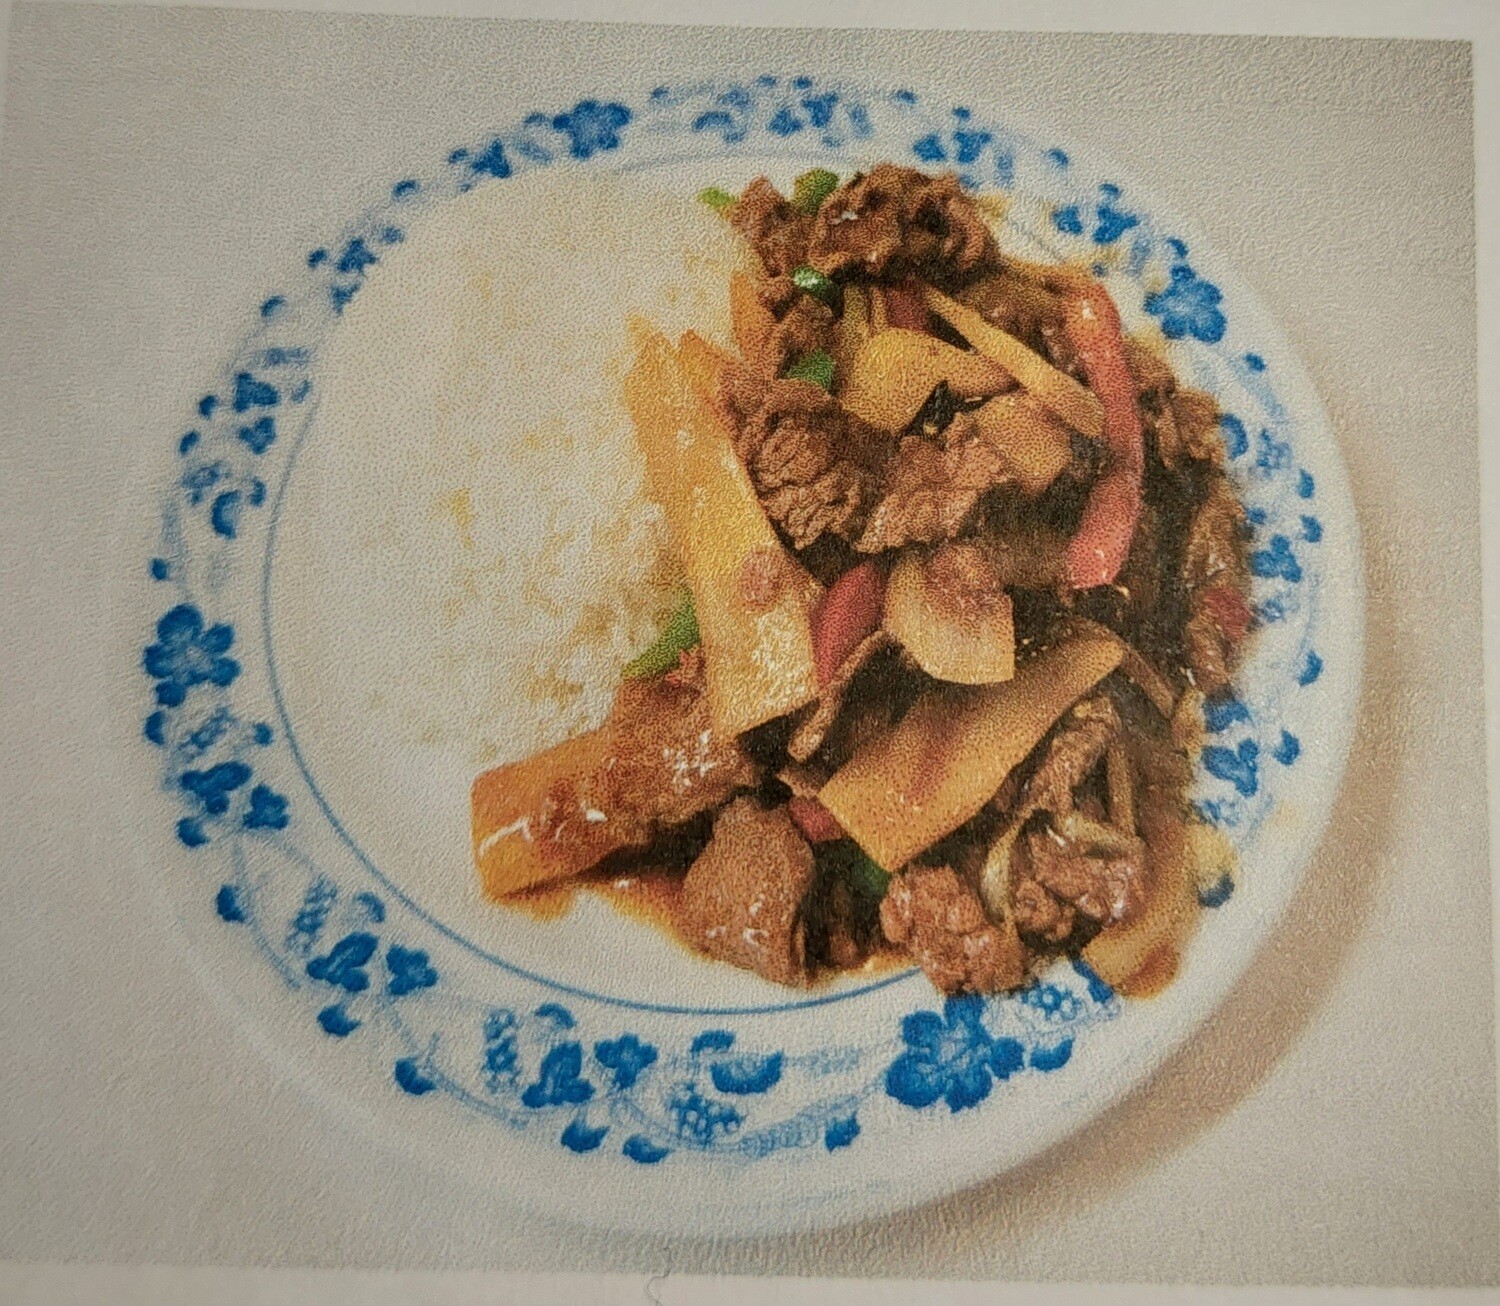 29. (p) Riz avec boeuf au basilic piquante
Rice with fried beef with hot basilic